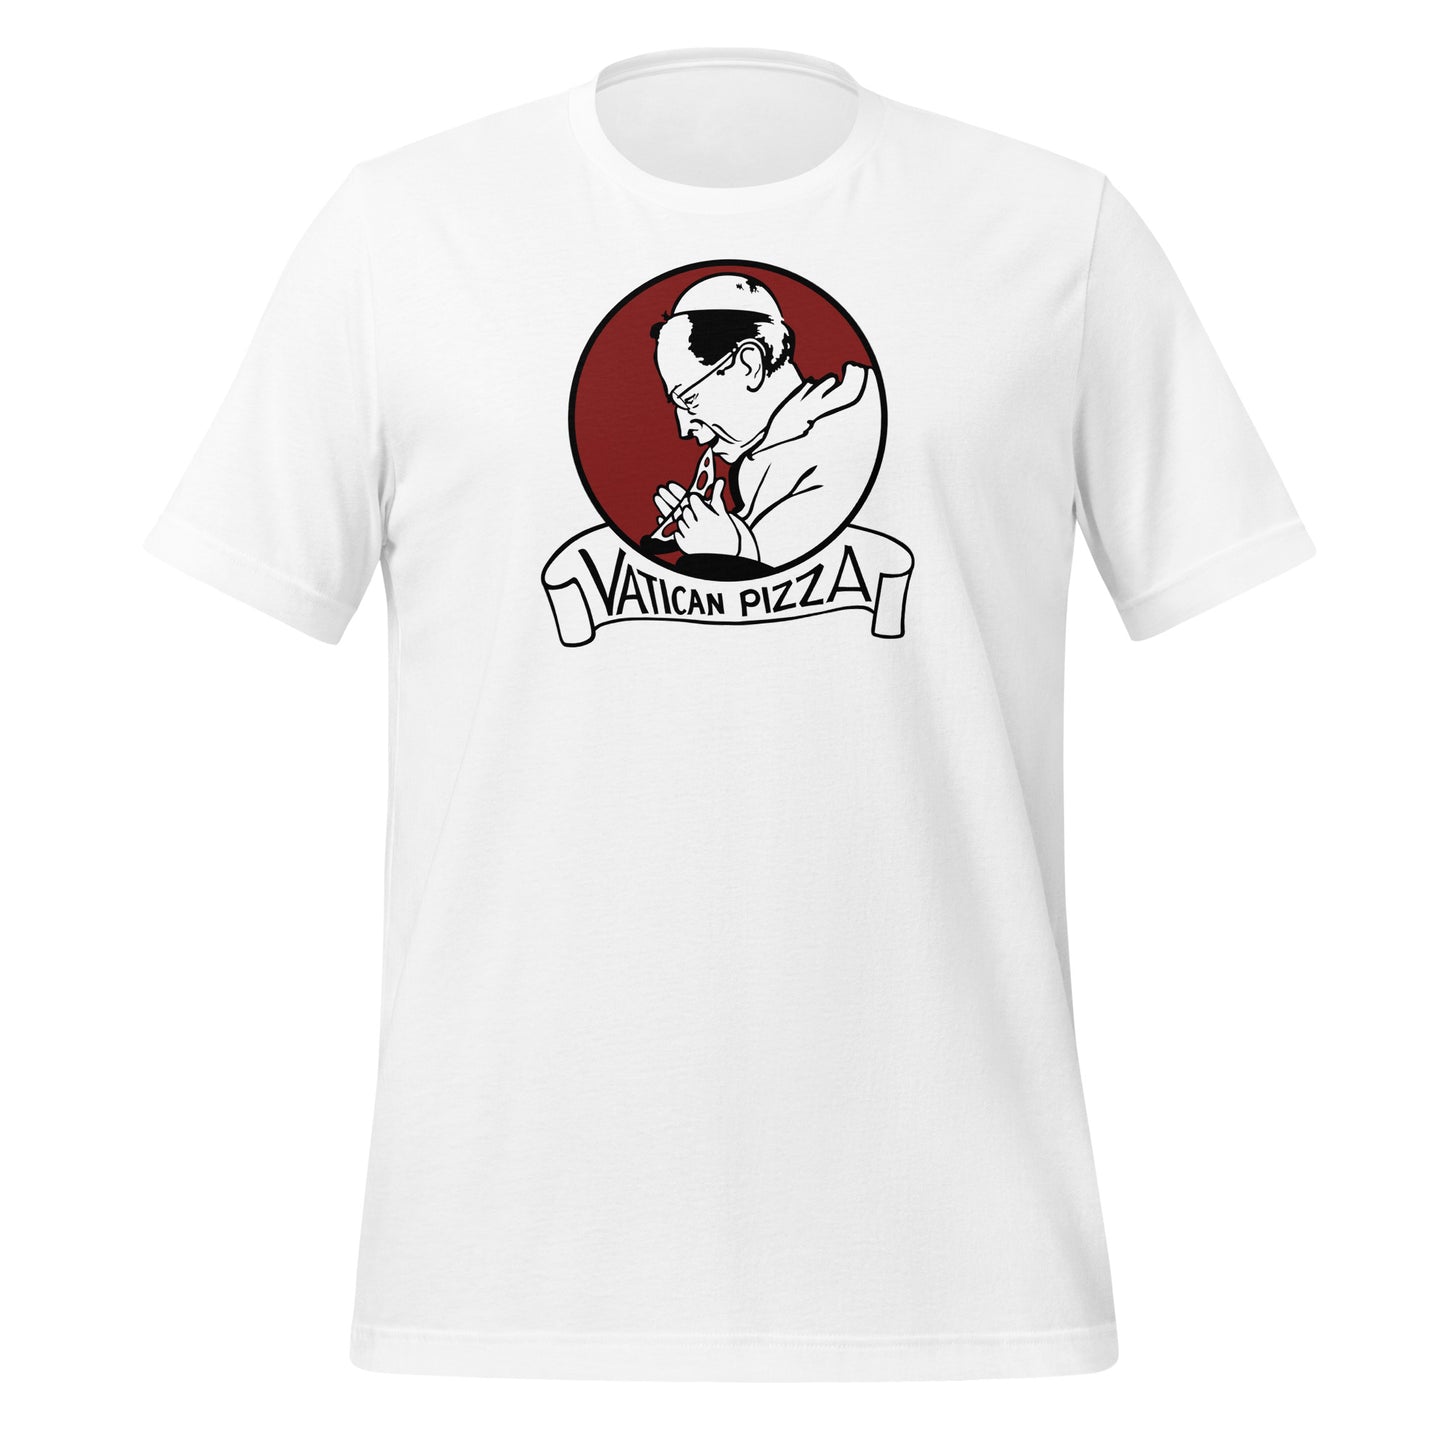 Vatican Pizza unisex printed t-shirt